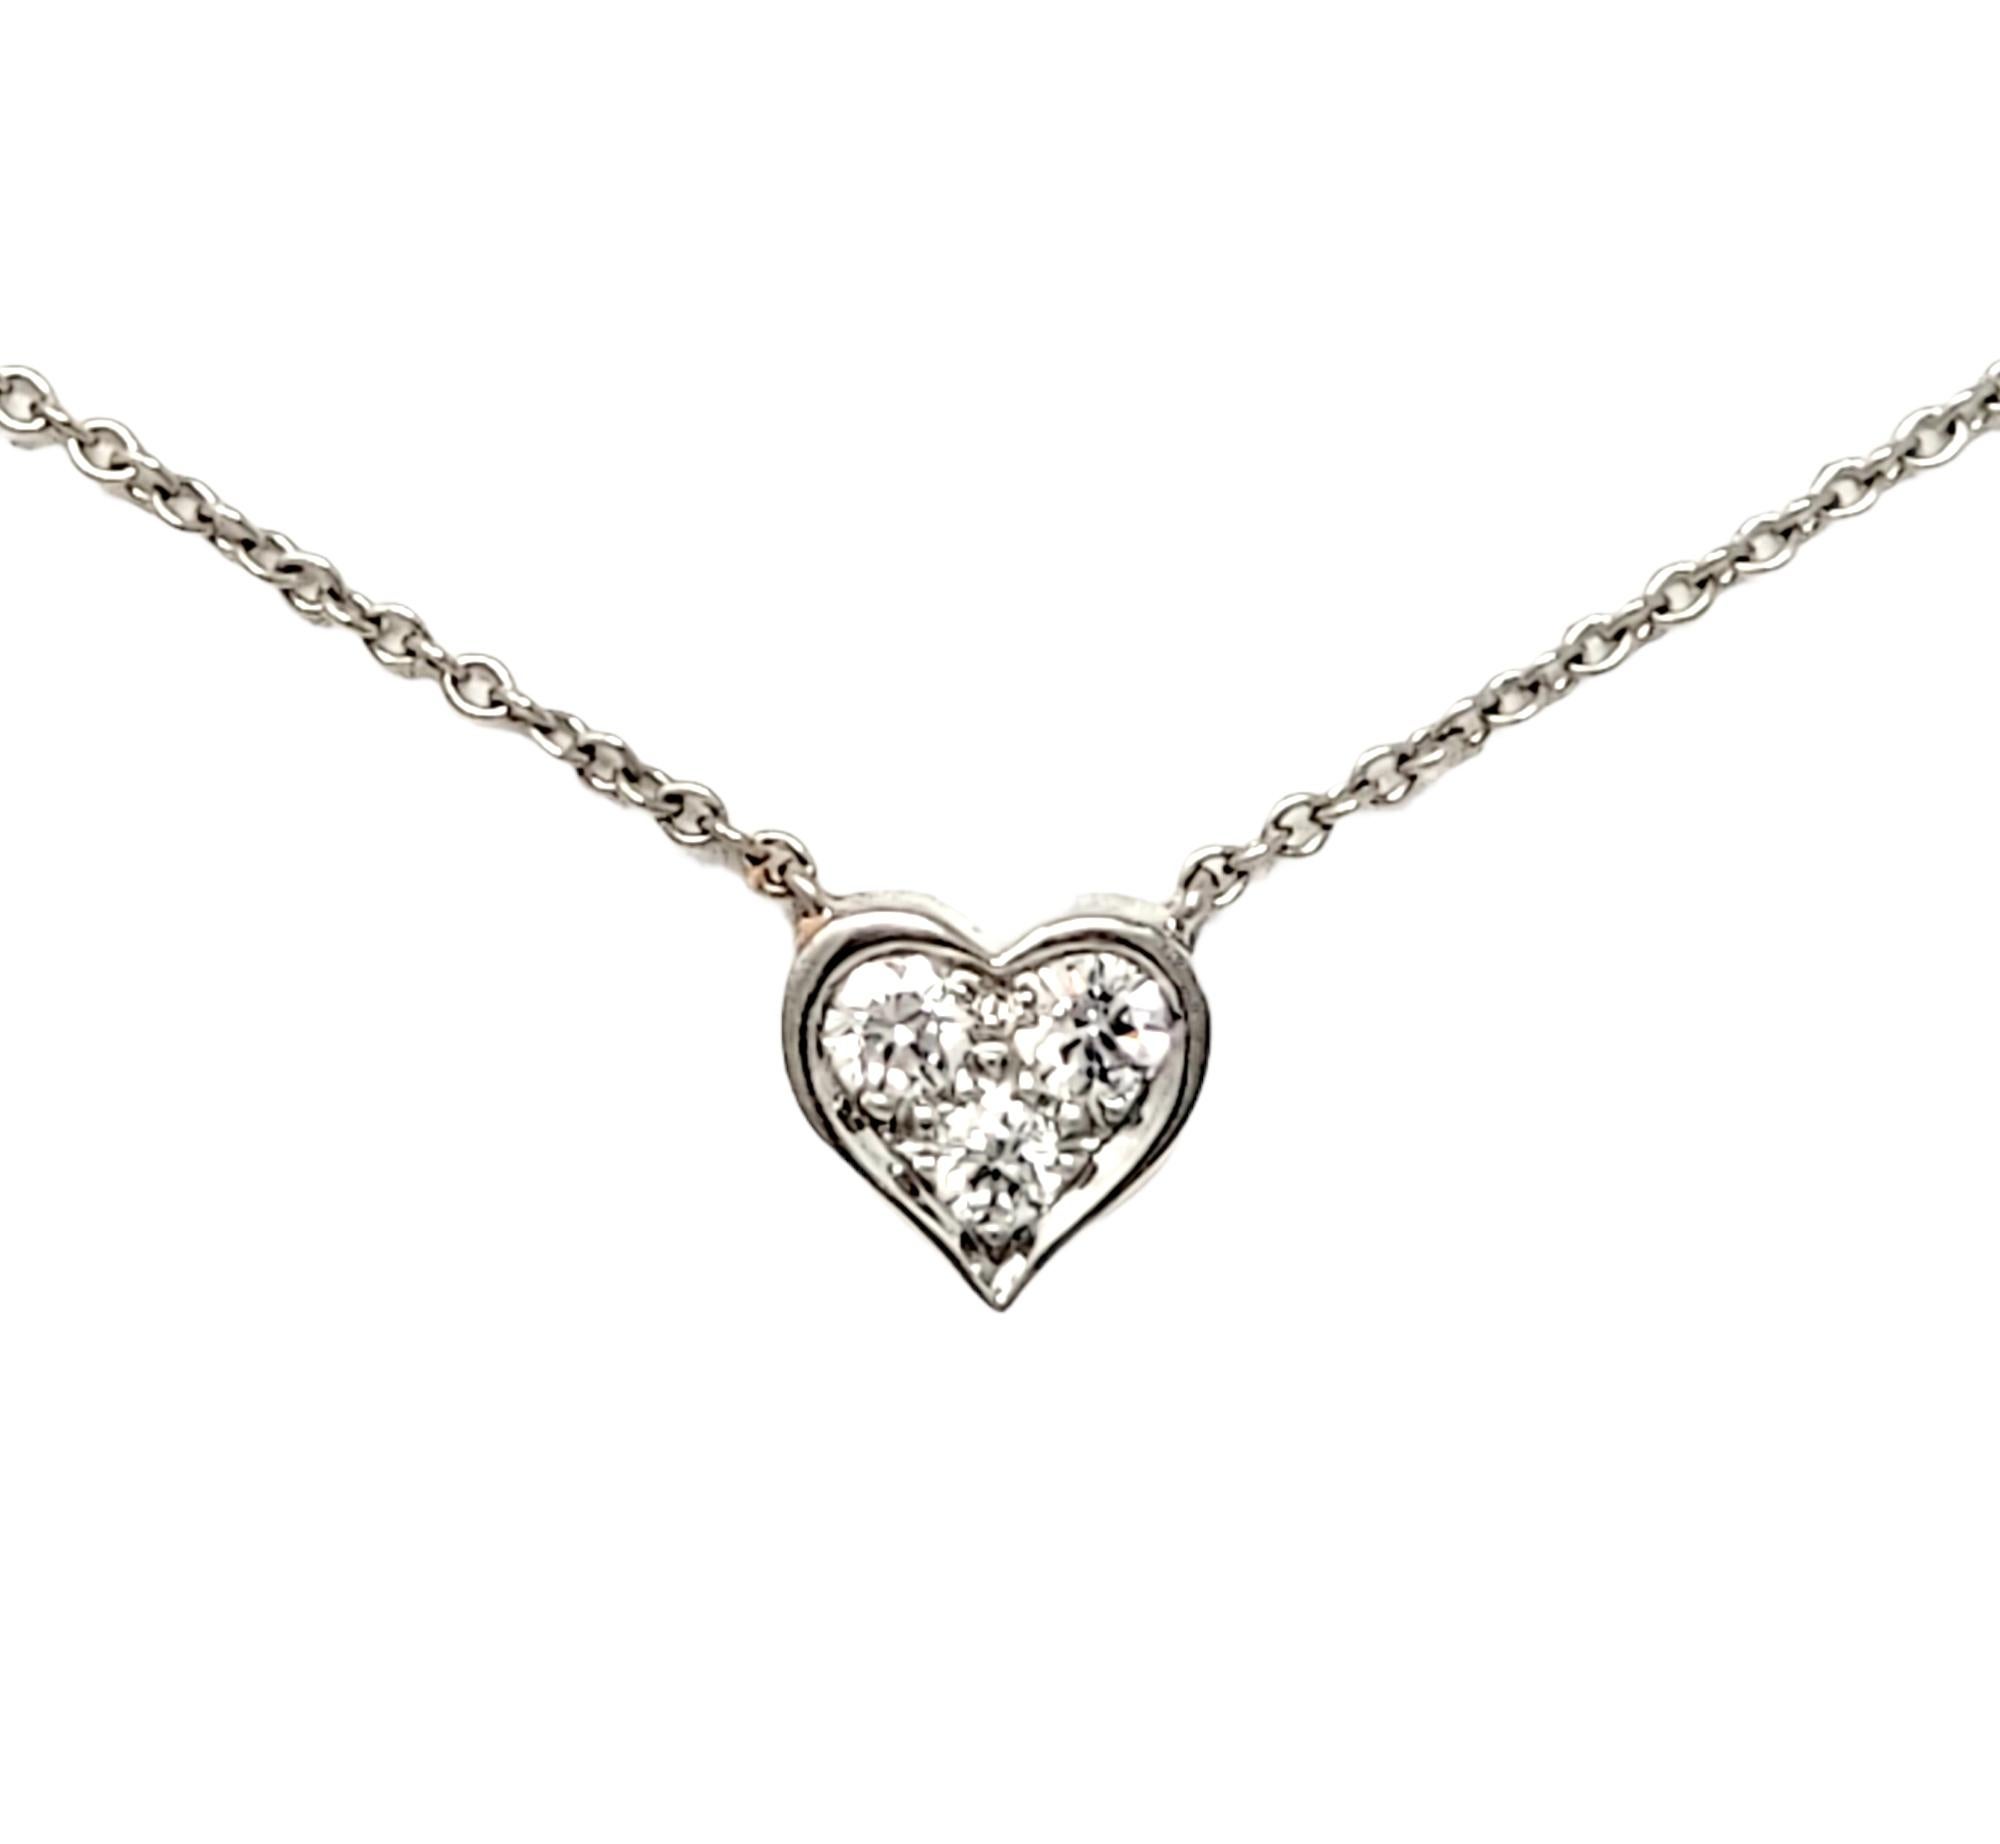 3 diamond heart necklace